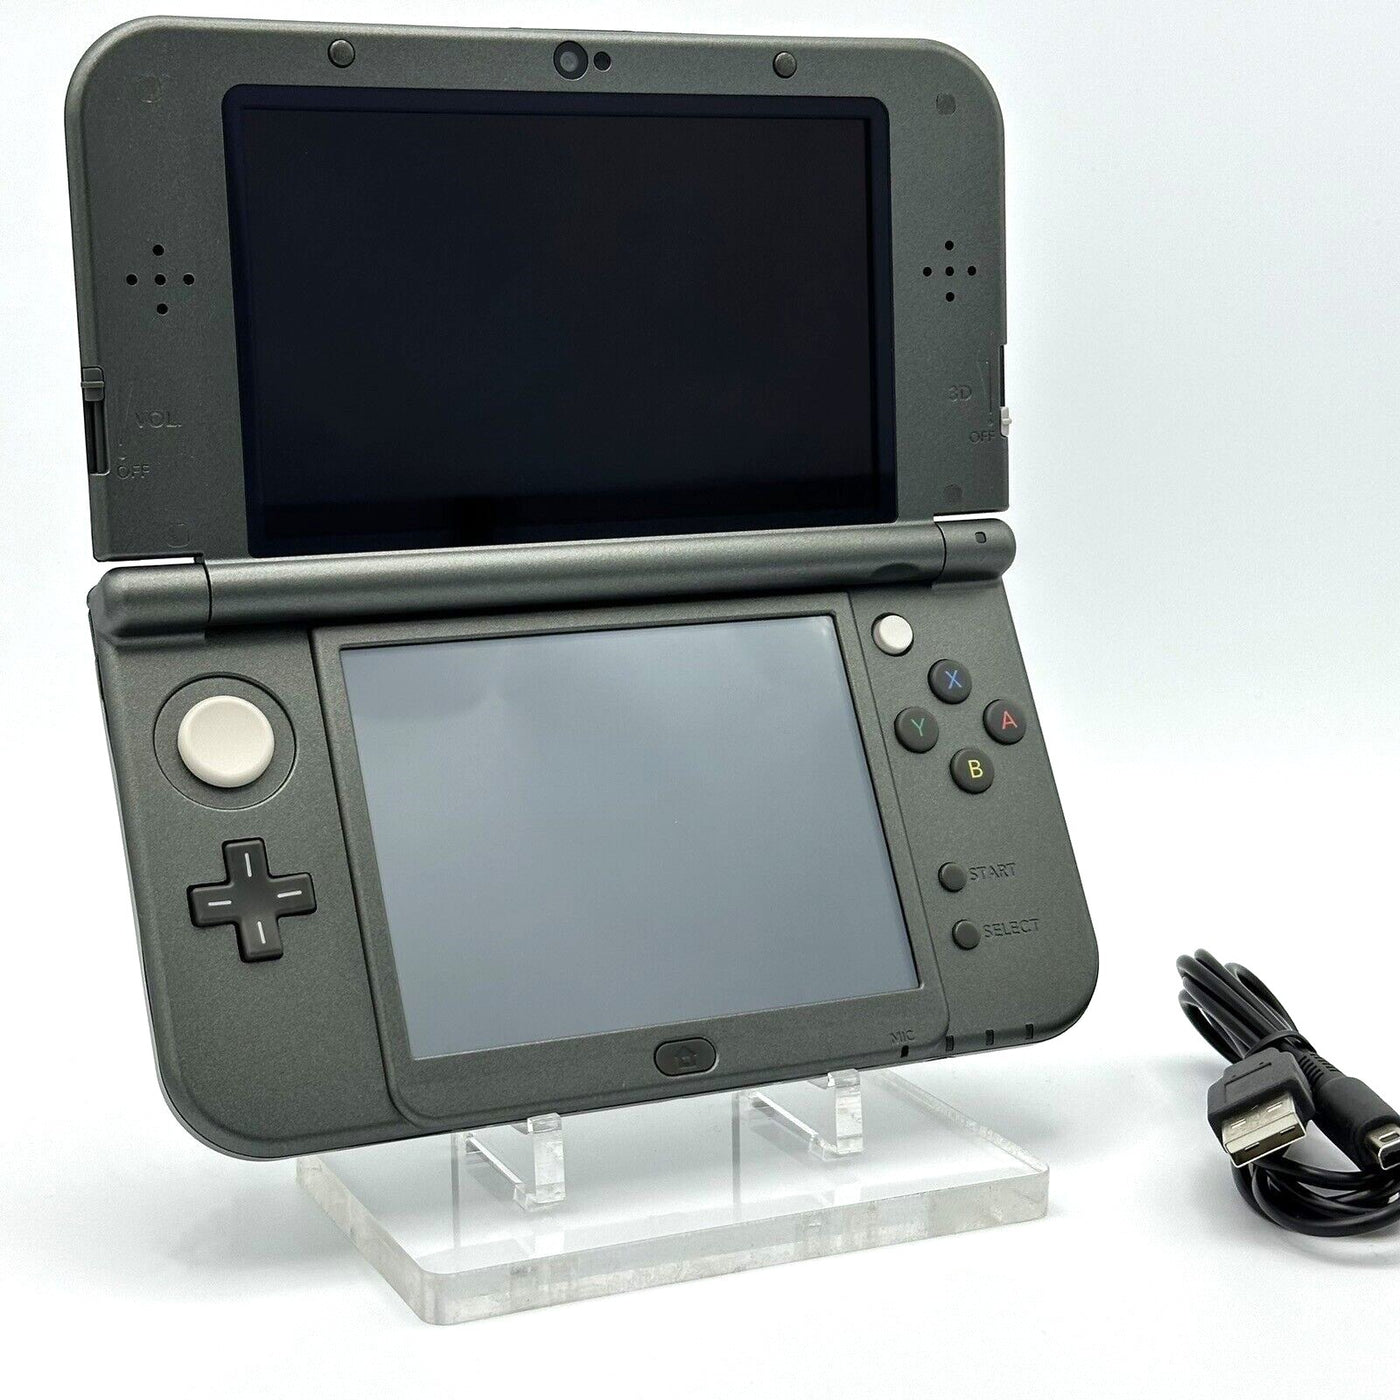 Nintendo New 3DS XL Console - Metallic Black - Refurbished